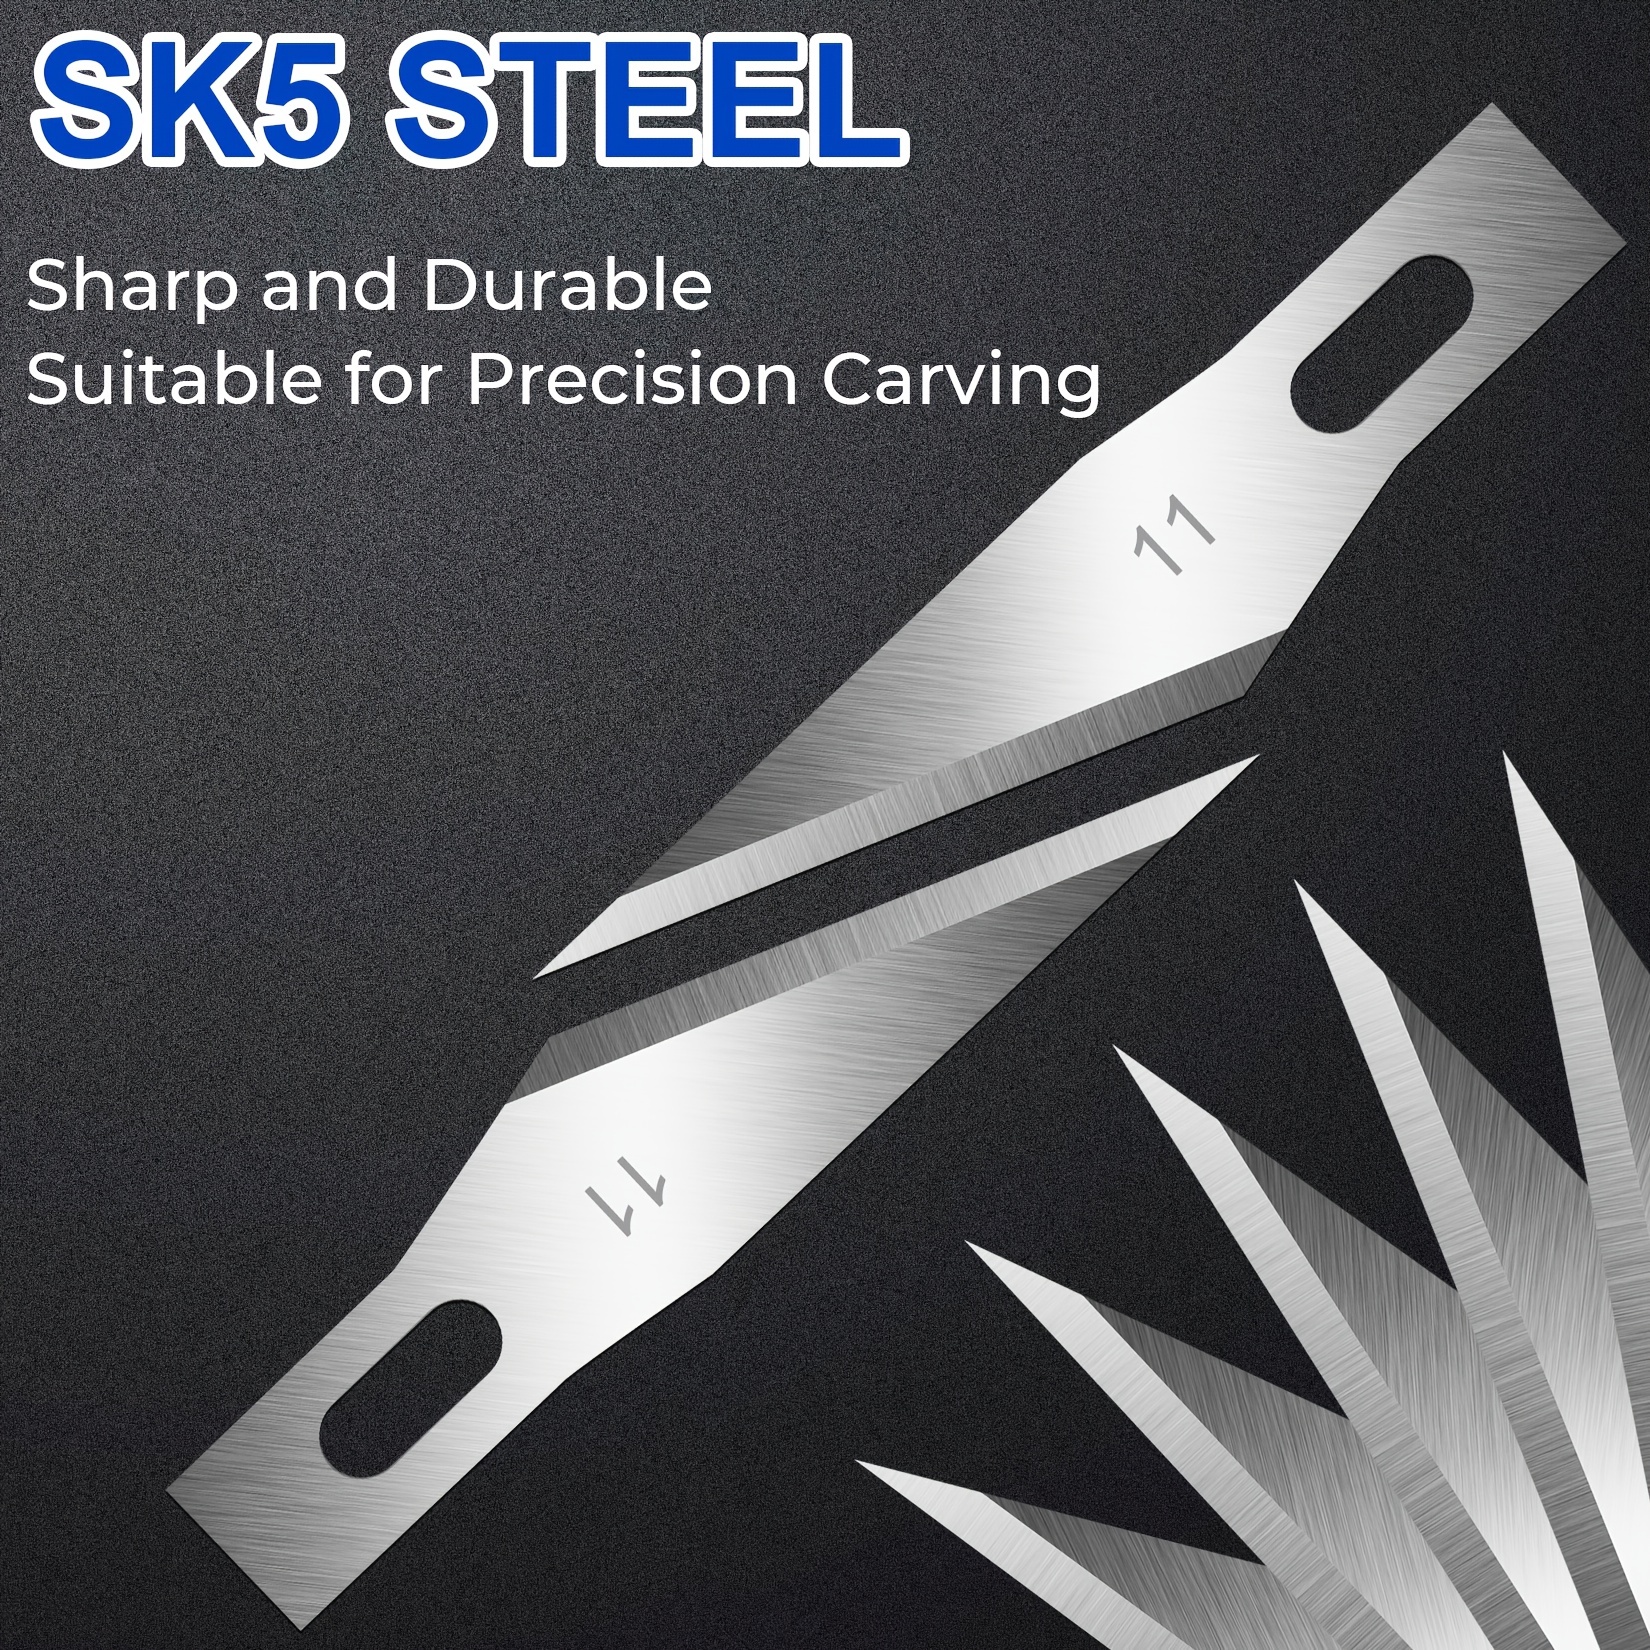 Kit 40 Exacto Knife Set Blades #11 Refill Xacto For Craft Cutting